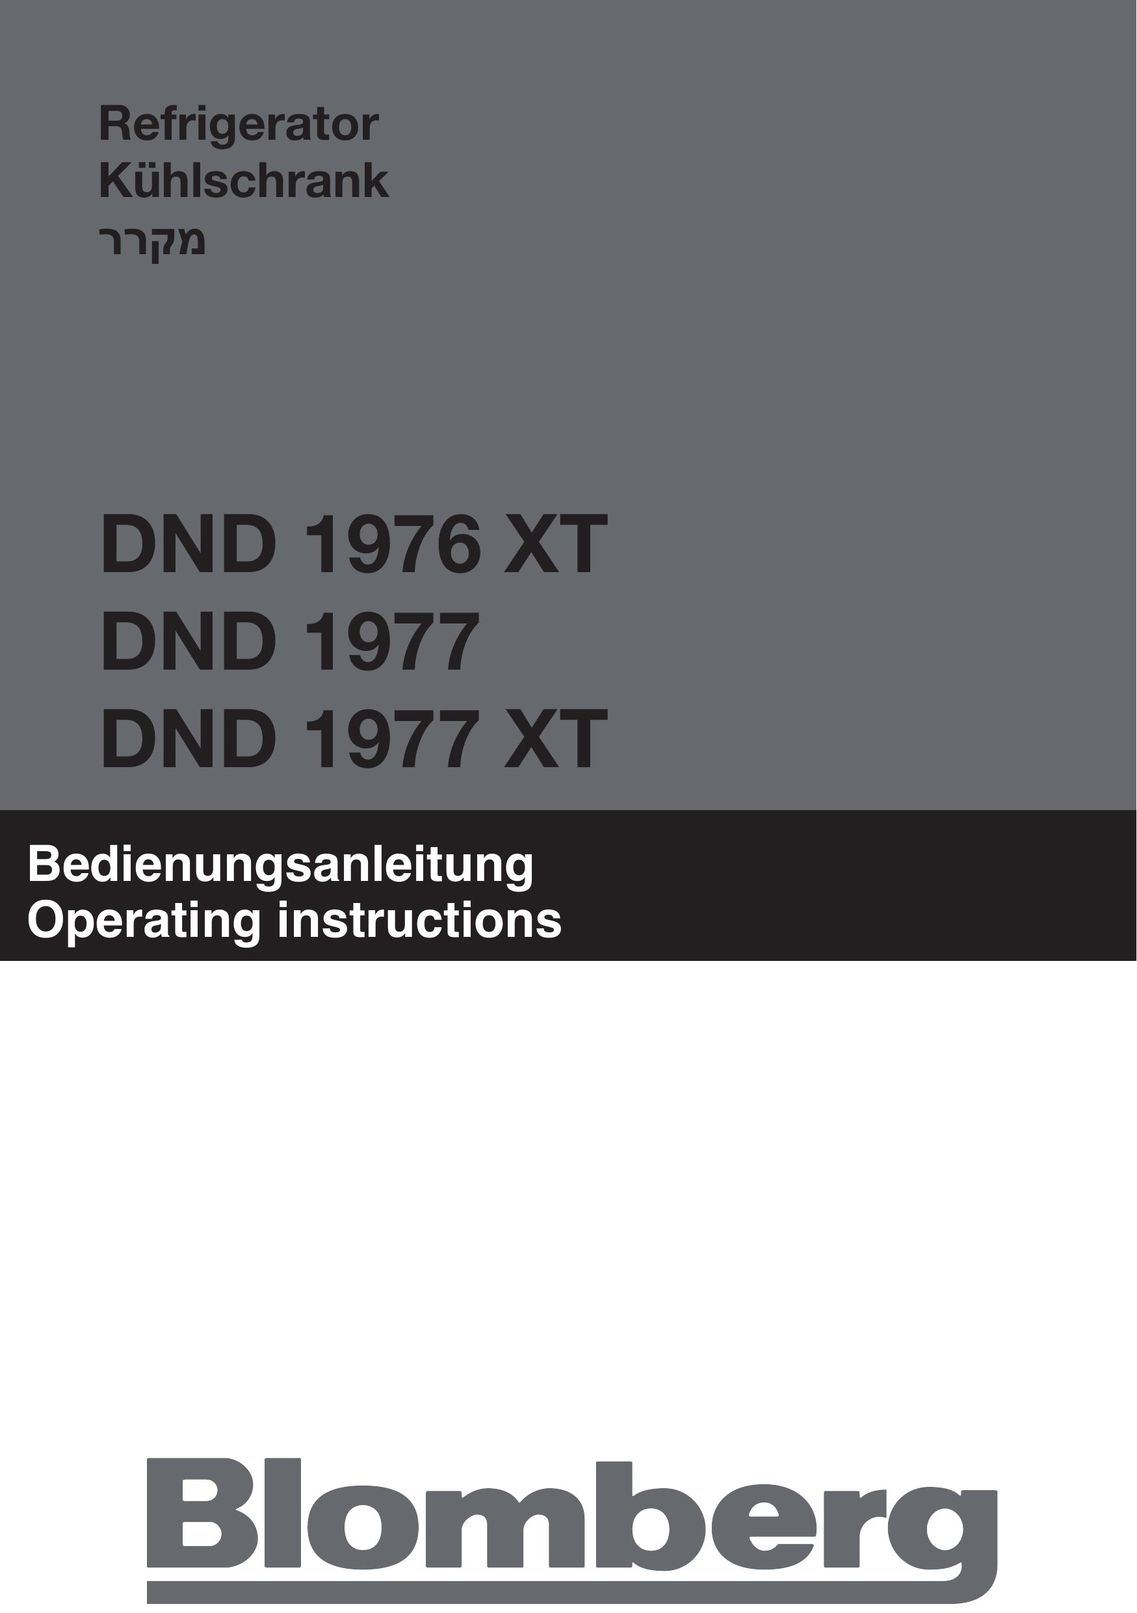 Blomberg DND 1977 XT Ice Maker User Manual